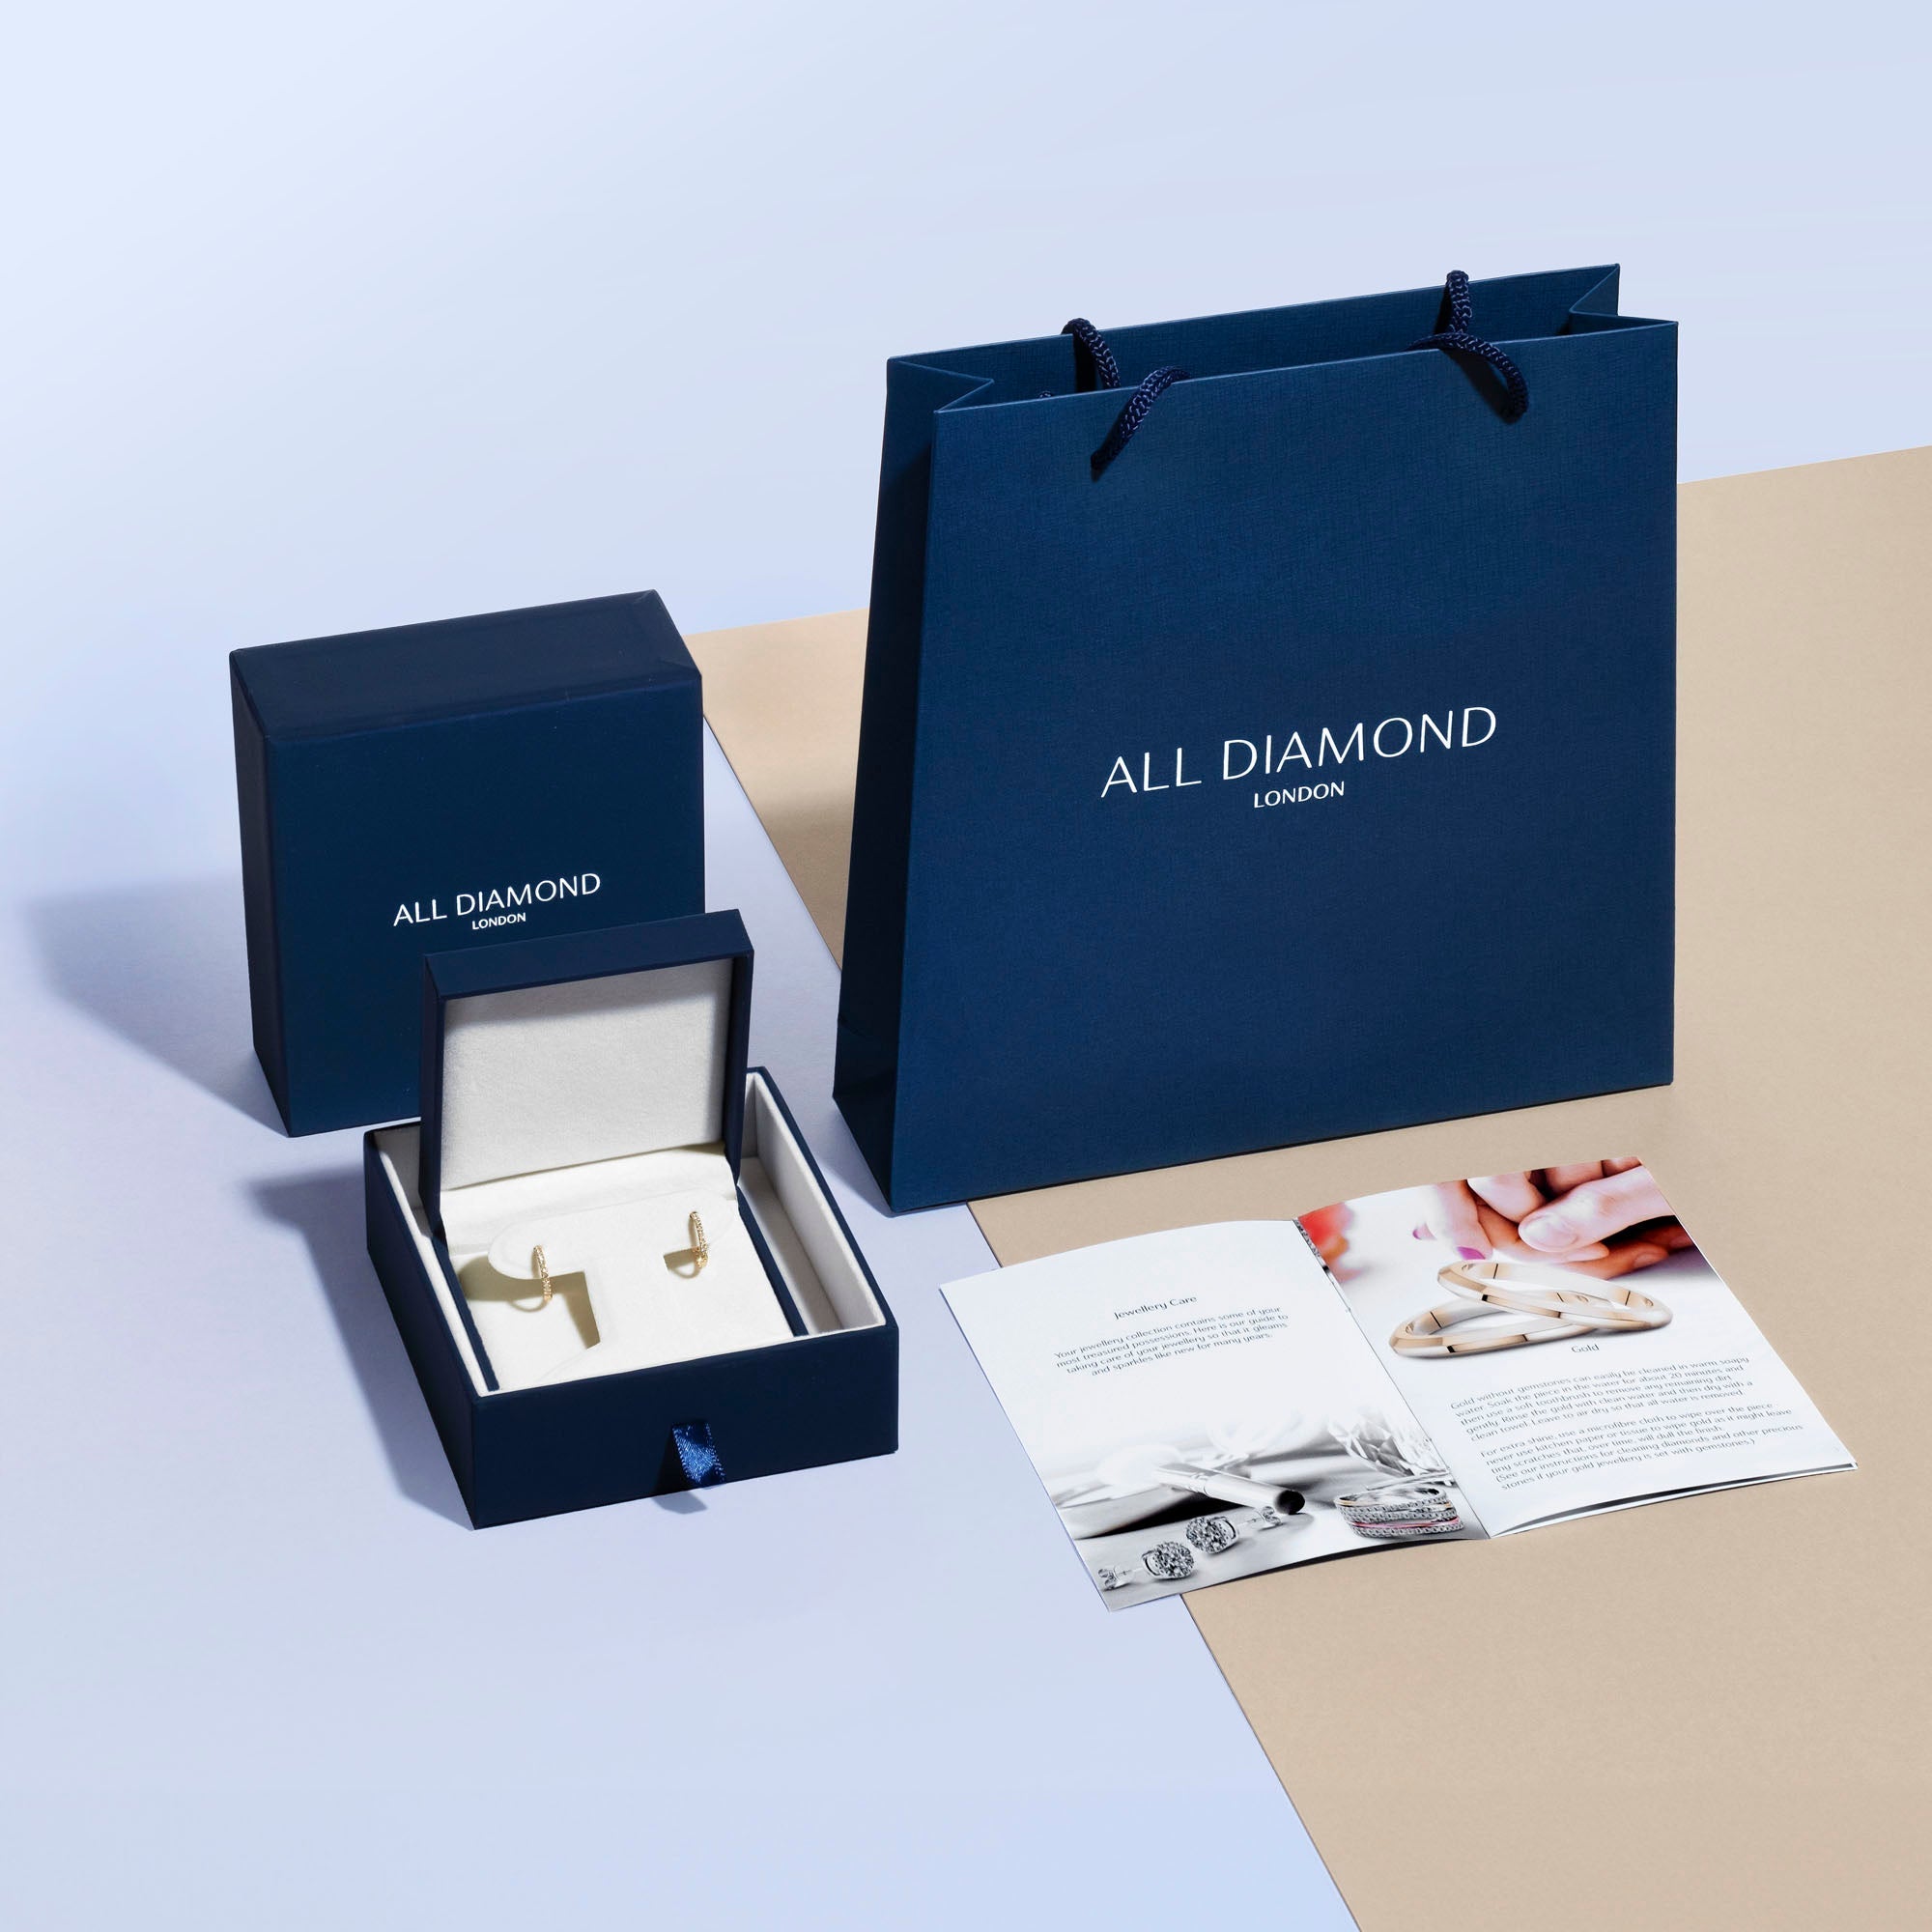 Round 3.75ct Aquamarine & Diamond Cluster Earrings in 18k Rose Gold - All Diamond